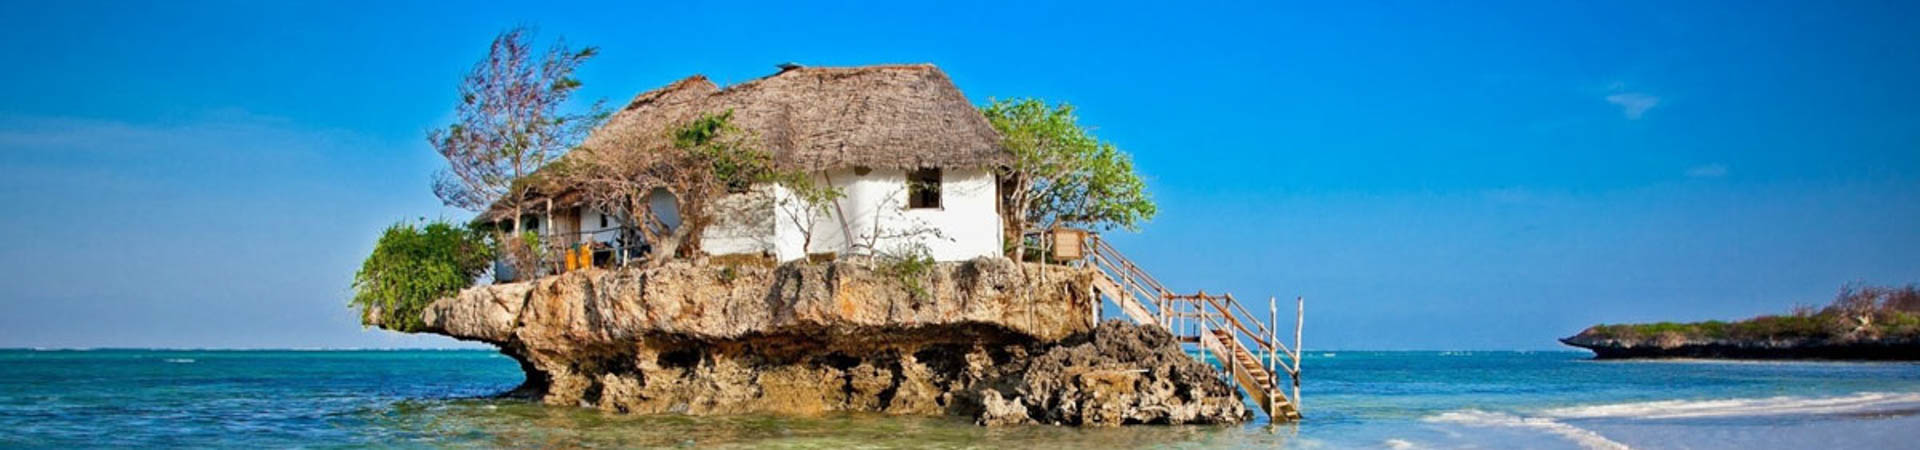 The Rock Restaurant - Zanzibar, Tanzania